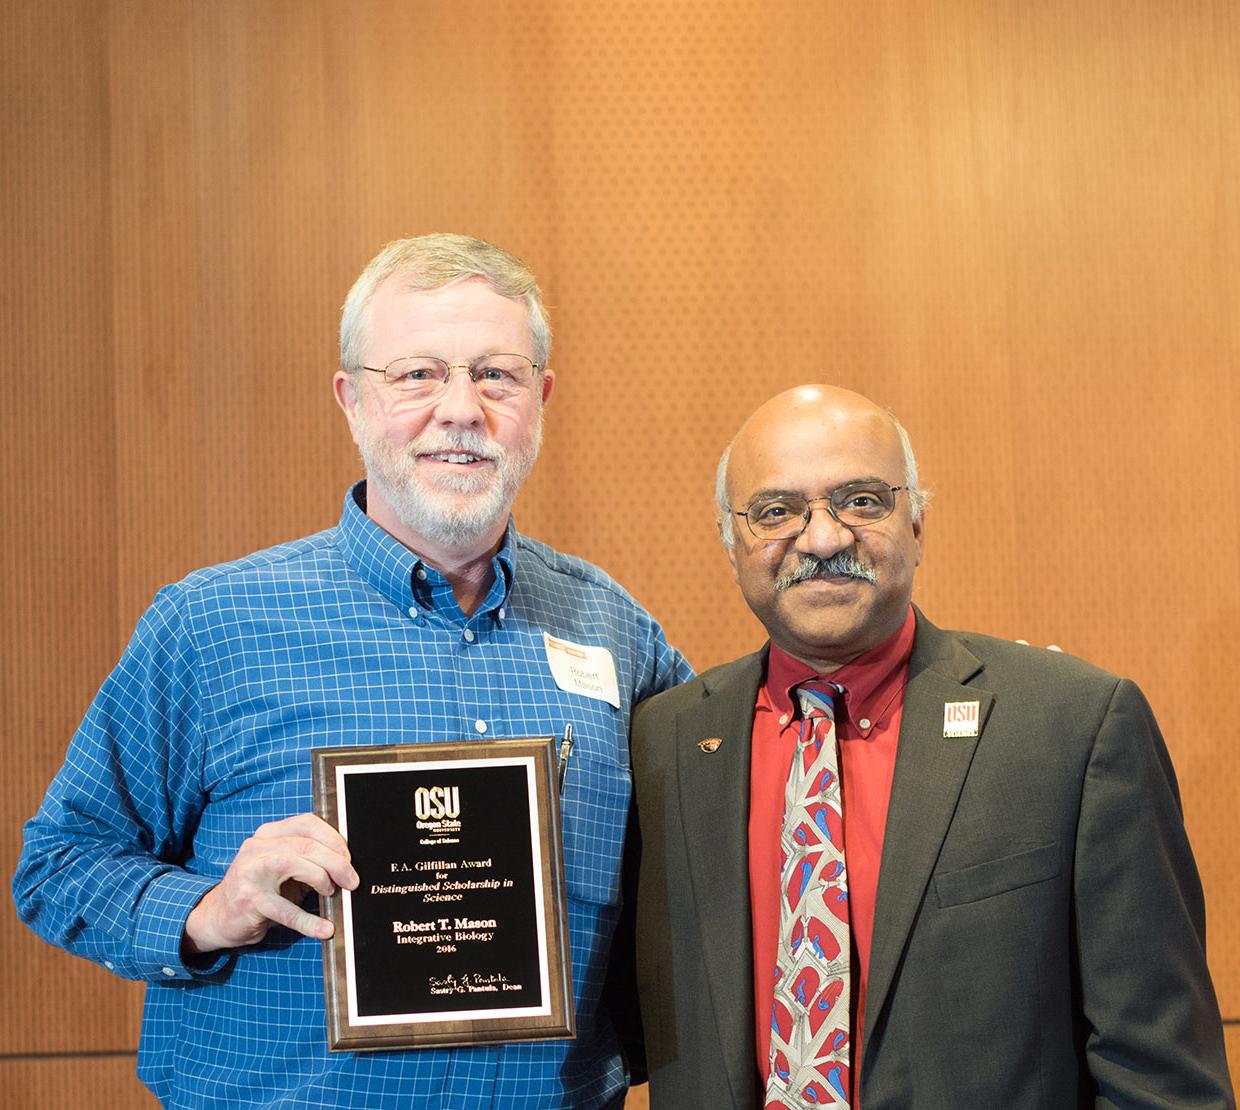 Robert T. Mason receiving award from Sastry Pantula